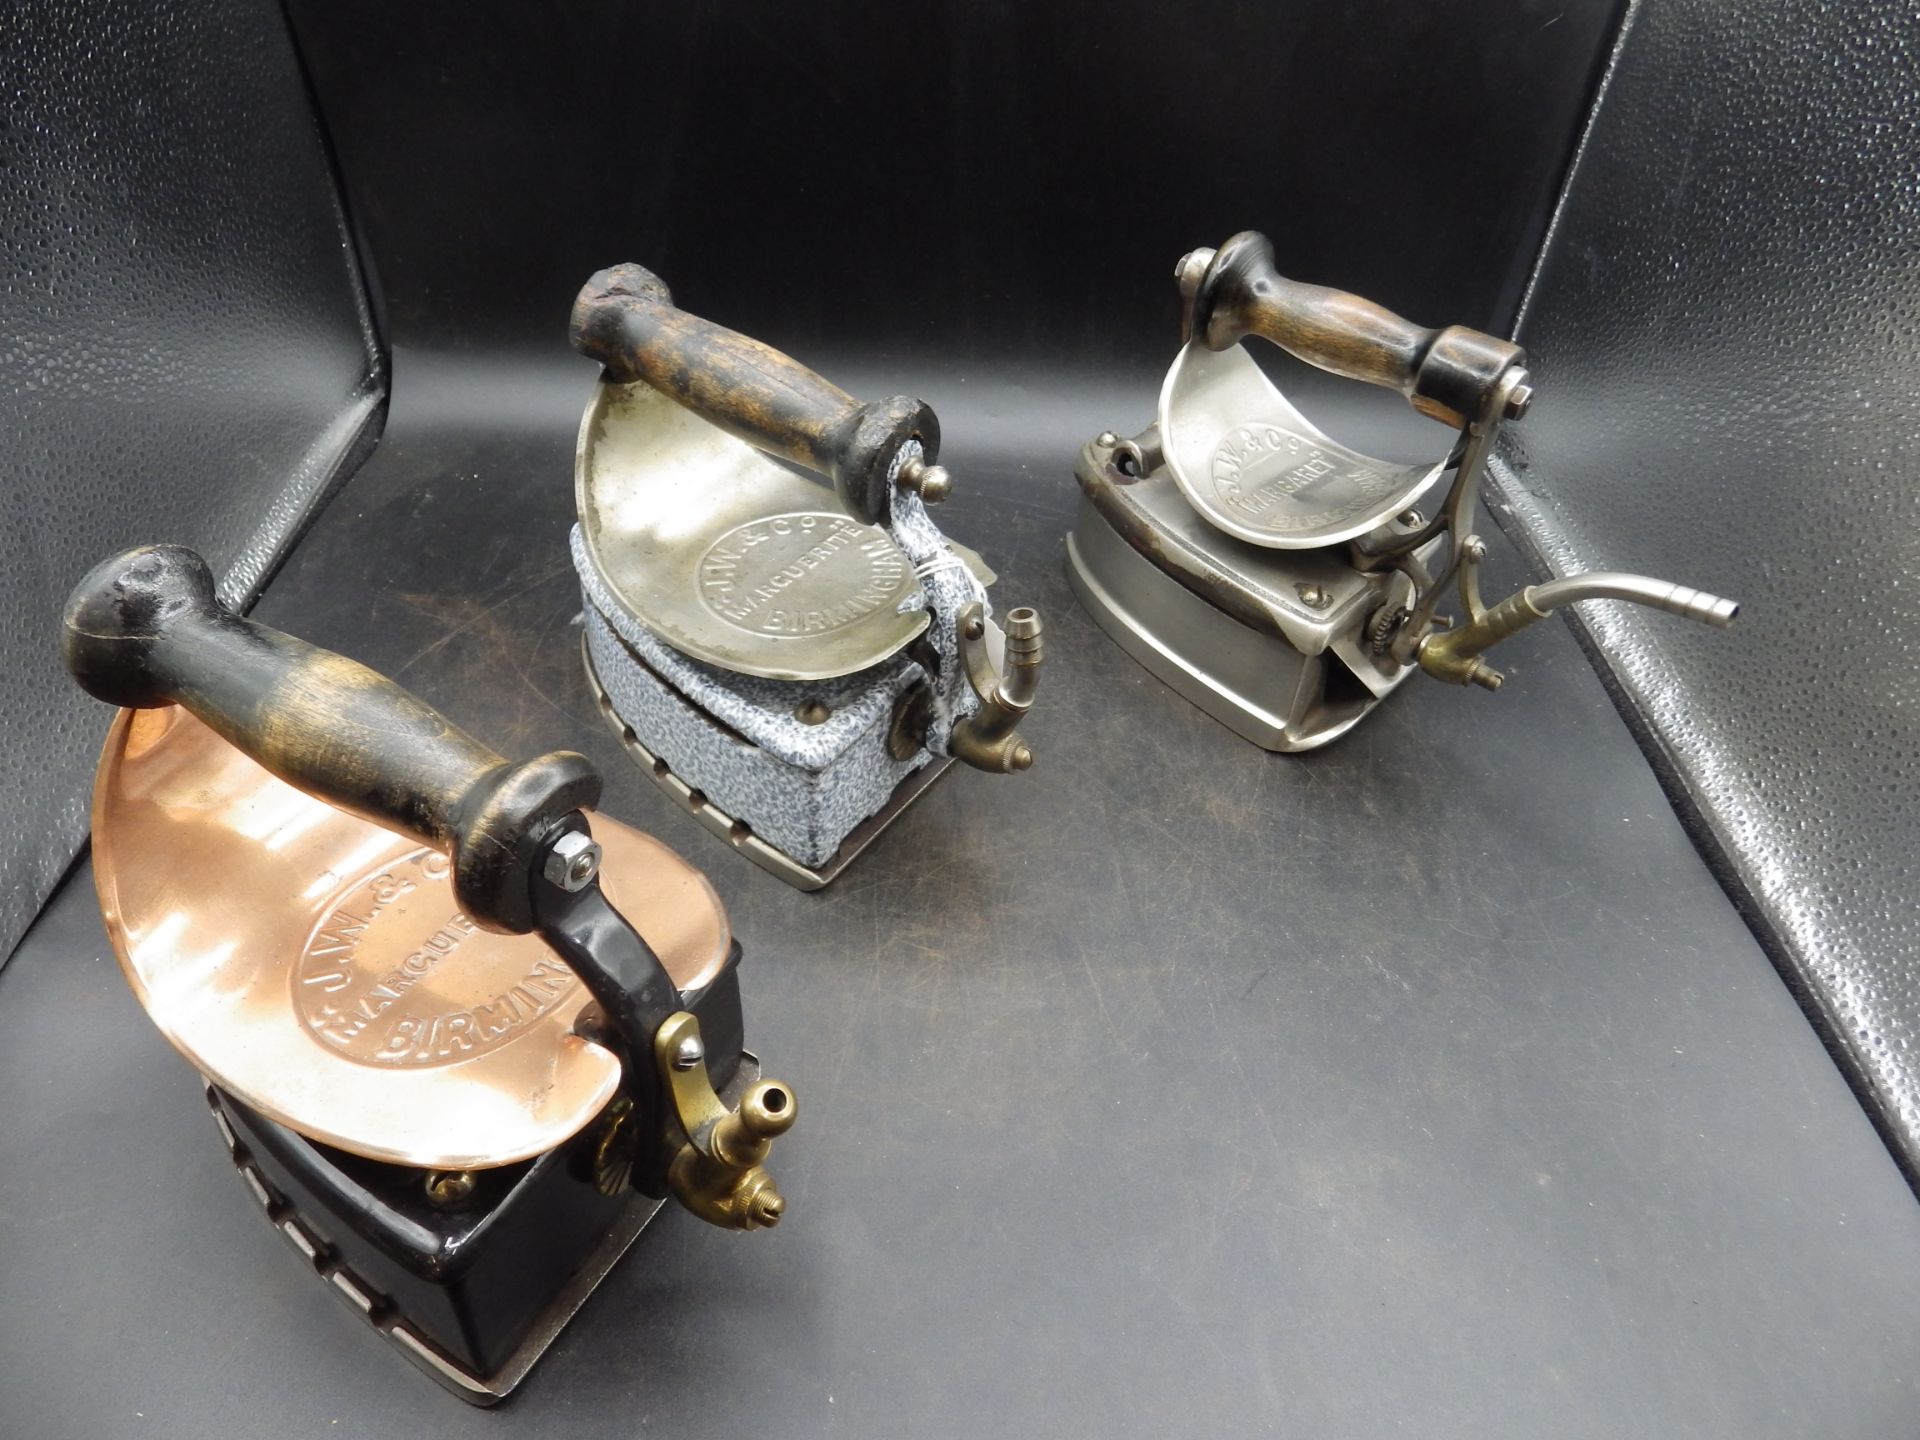 3 John Wright & Co Ltd Birmingham gas irons to incl Marguerite black enamel model with copper heat